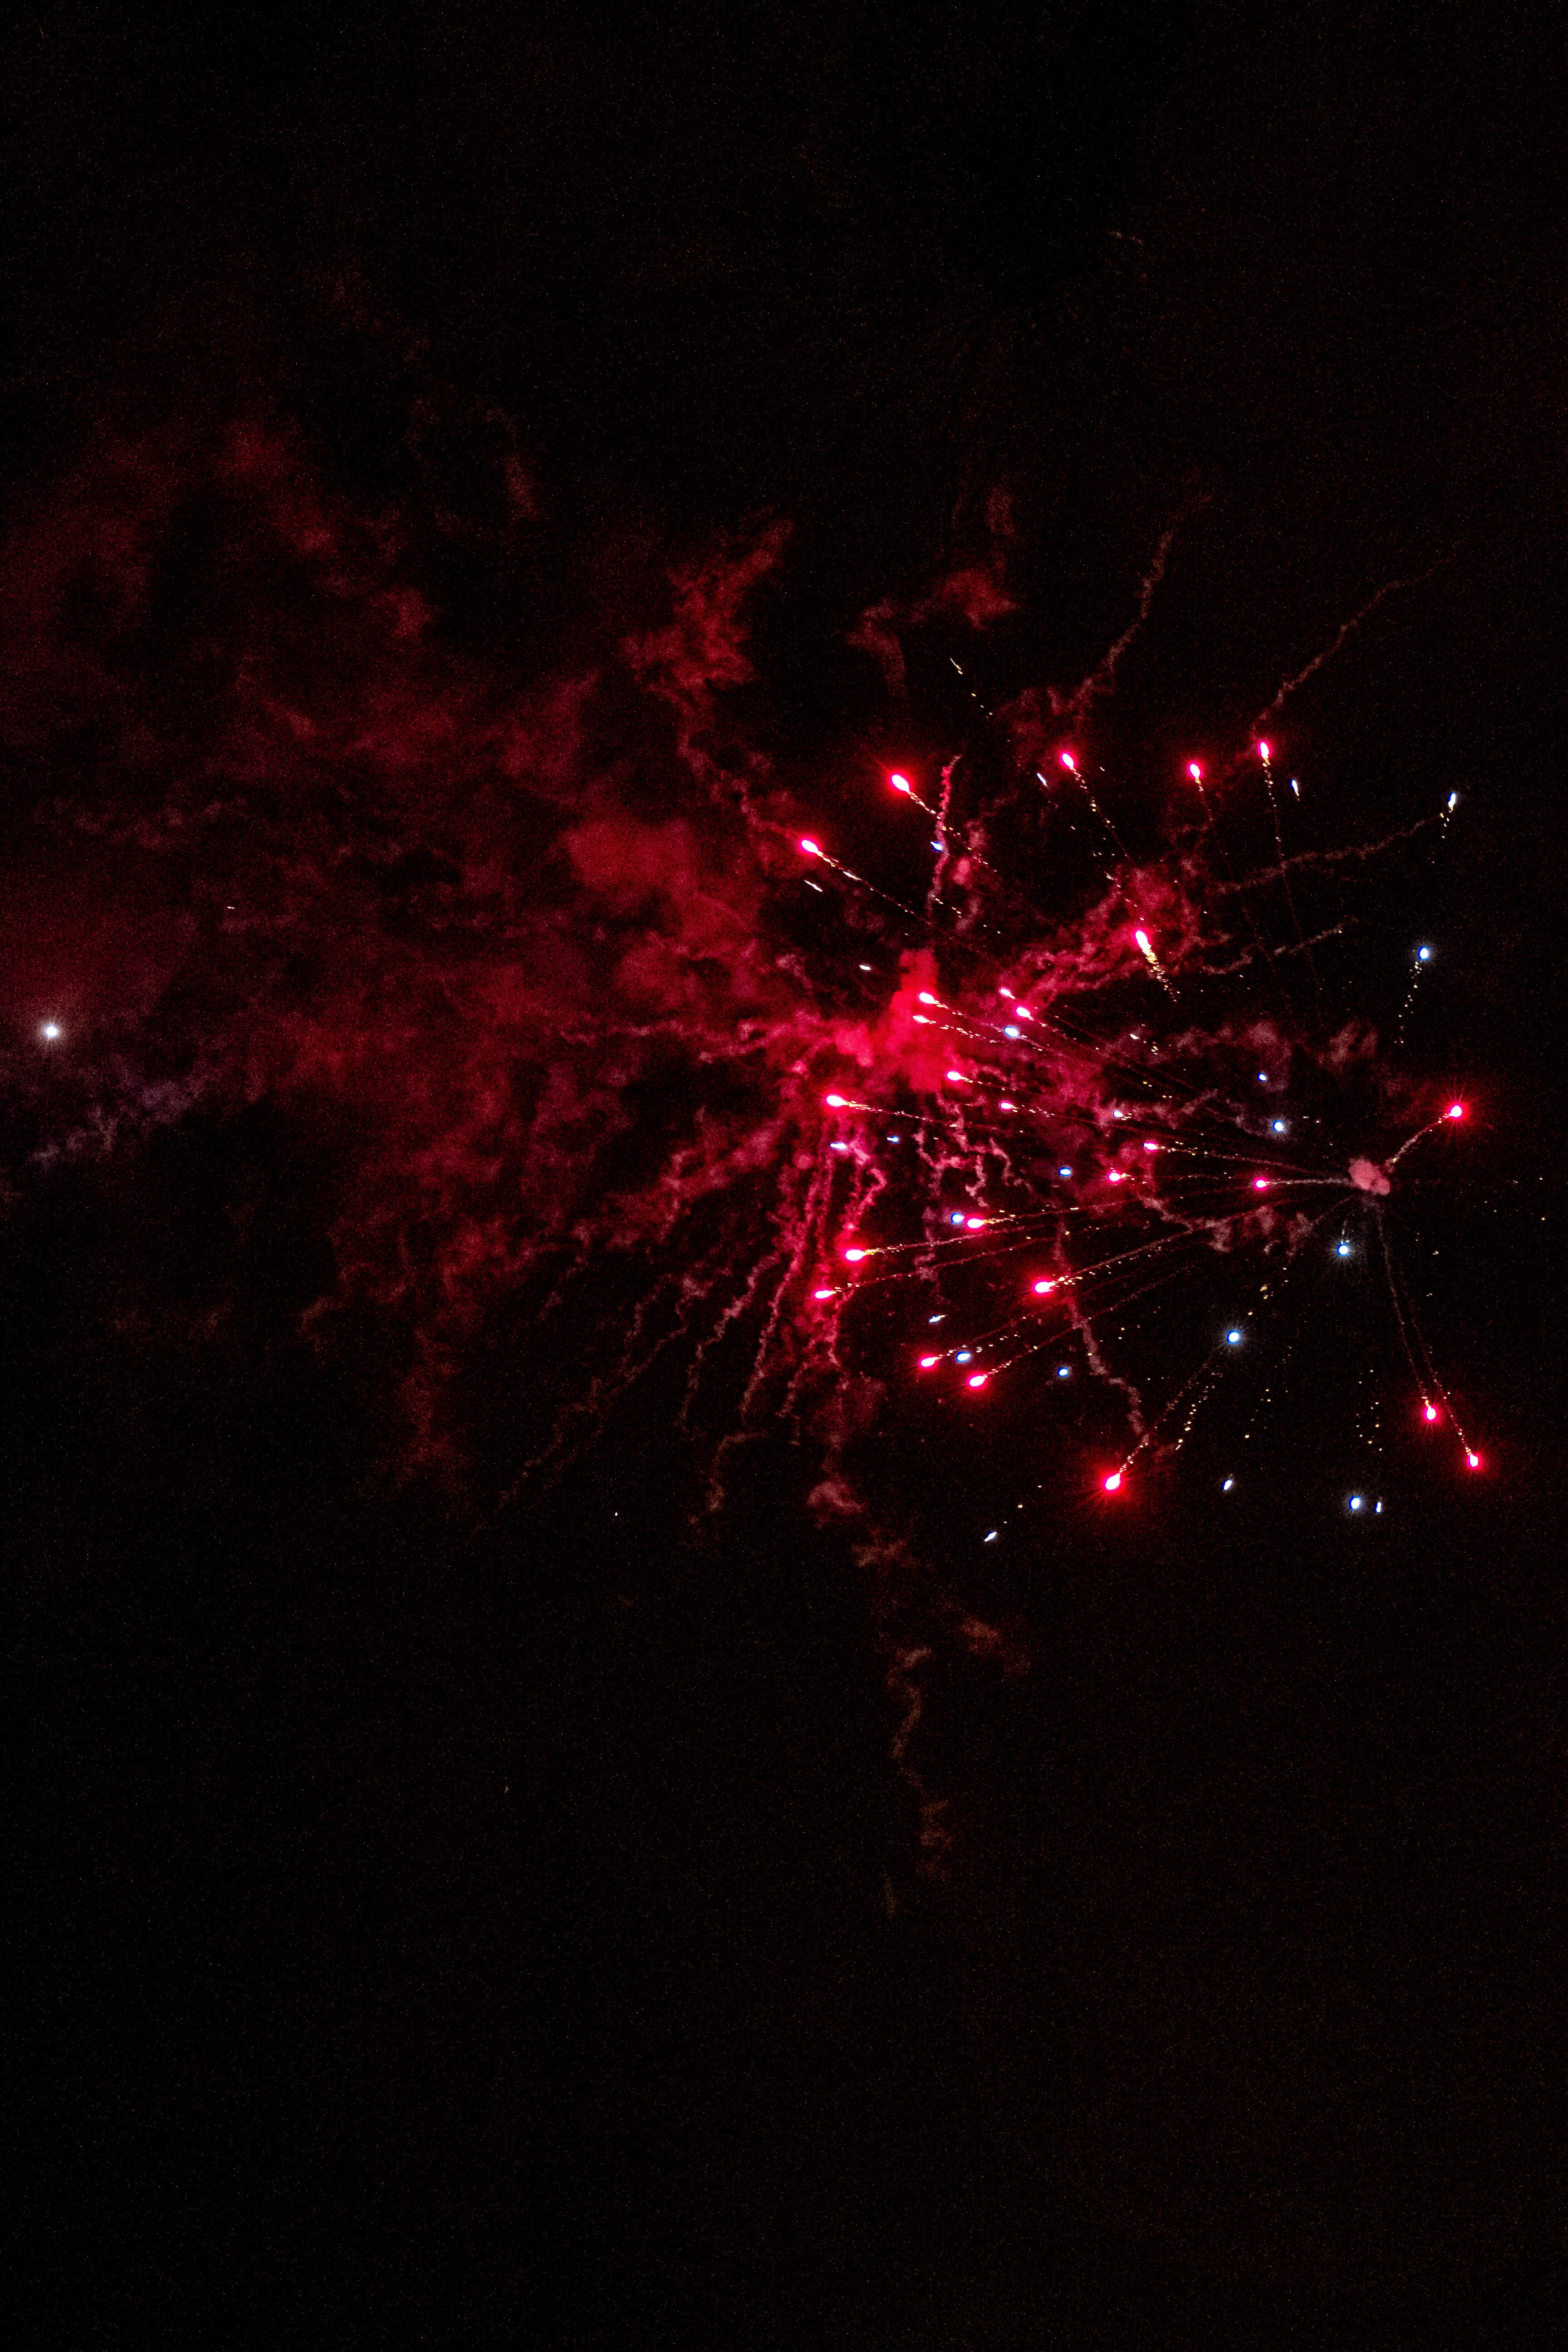 red, sparks, holidays, smoke, night, dark, fireworks, firework